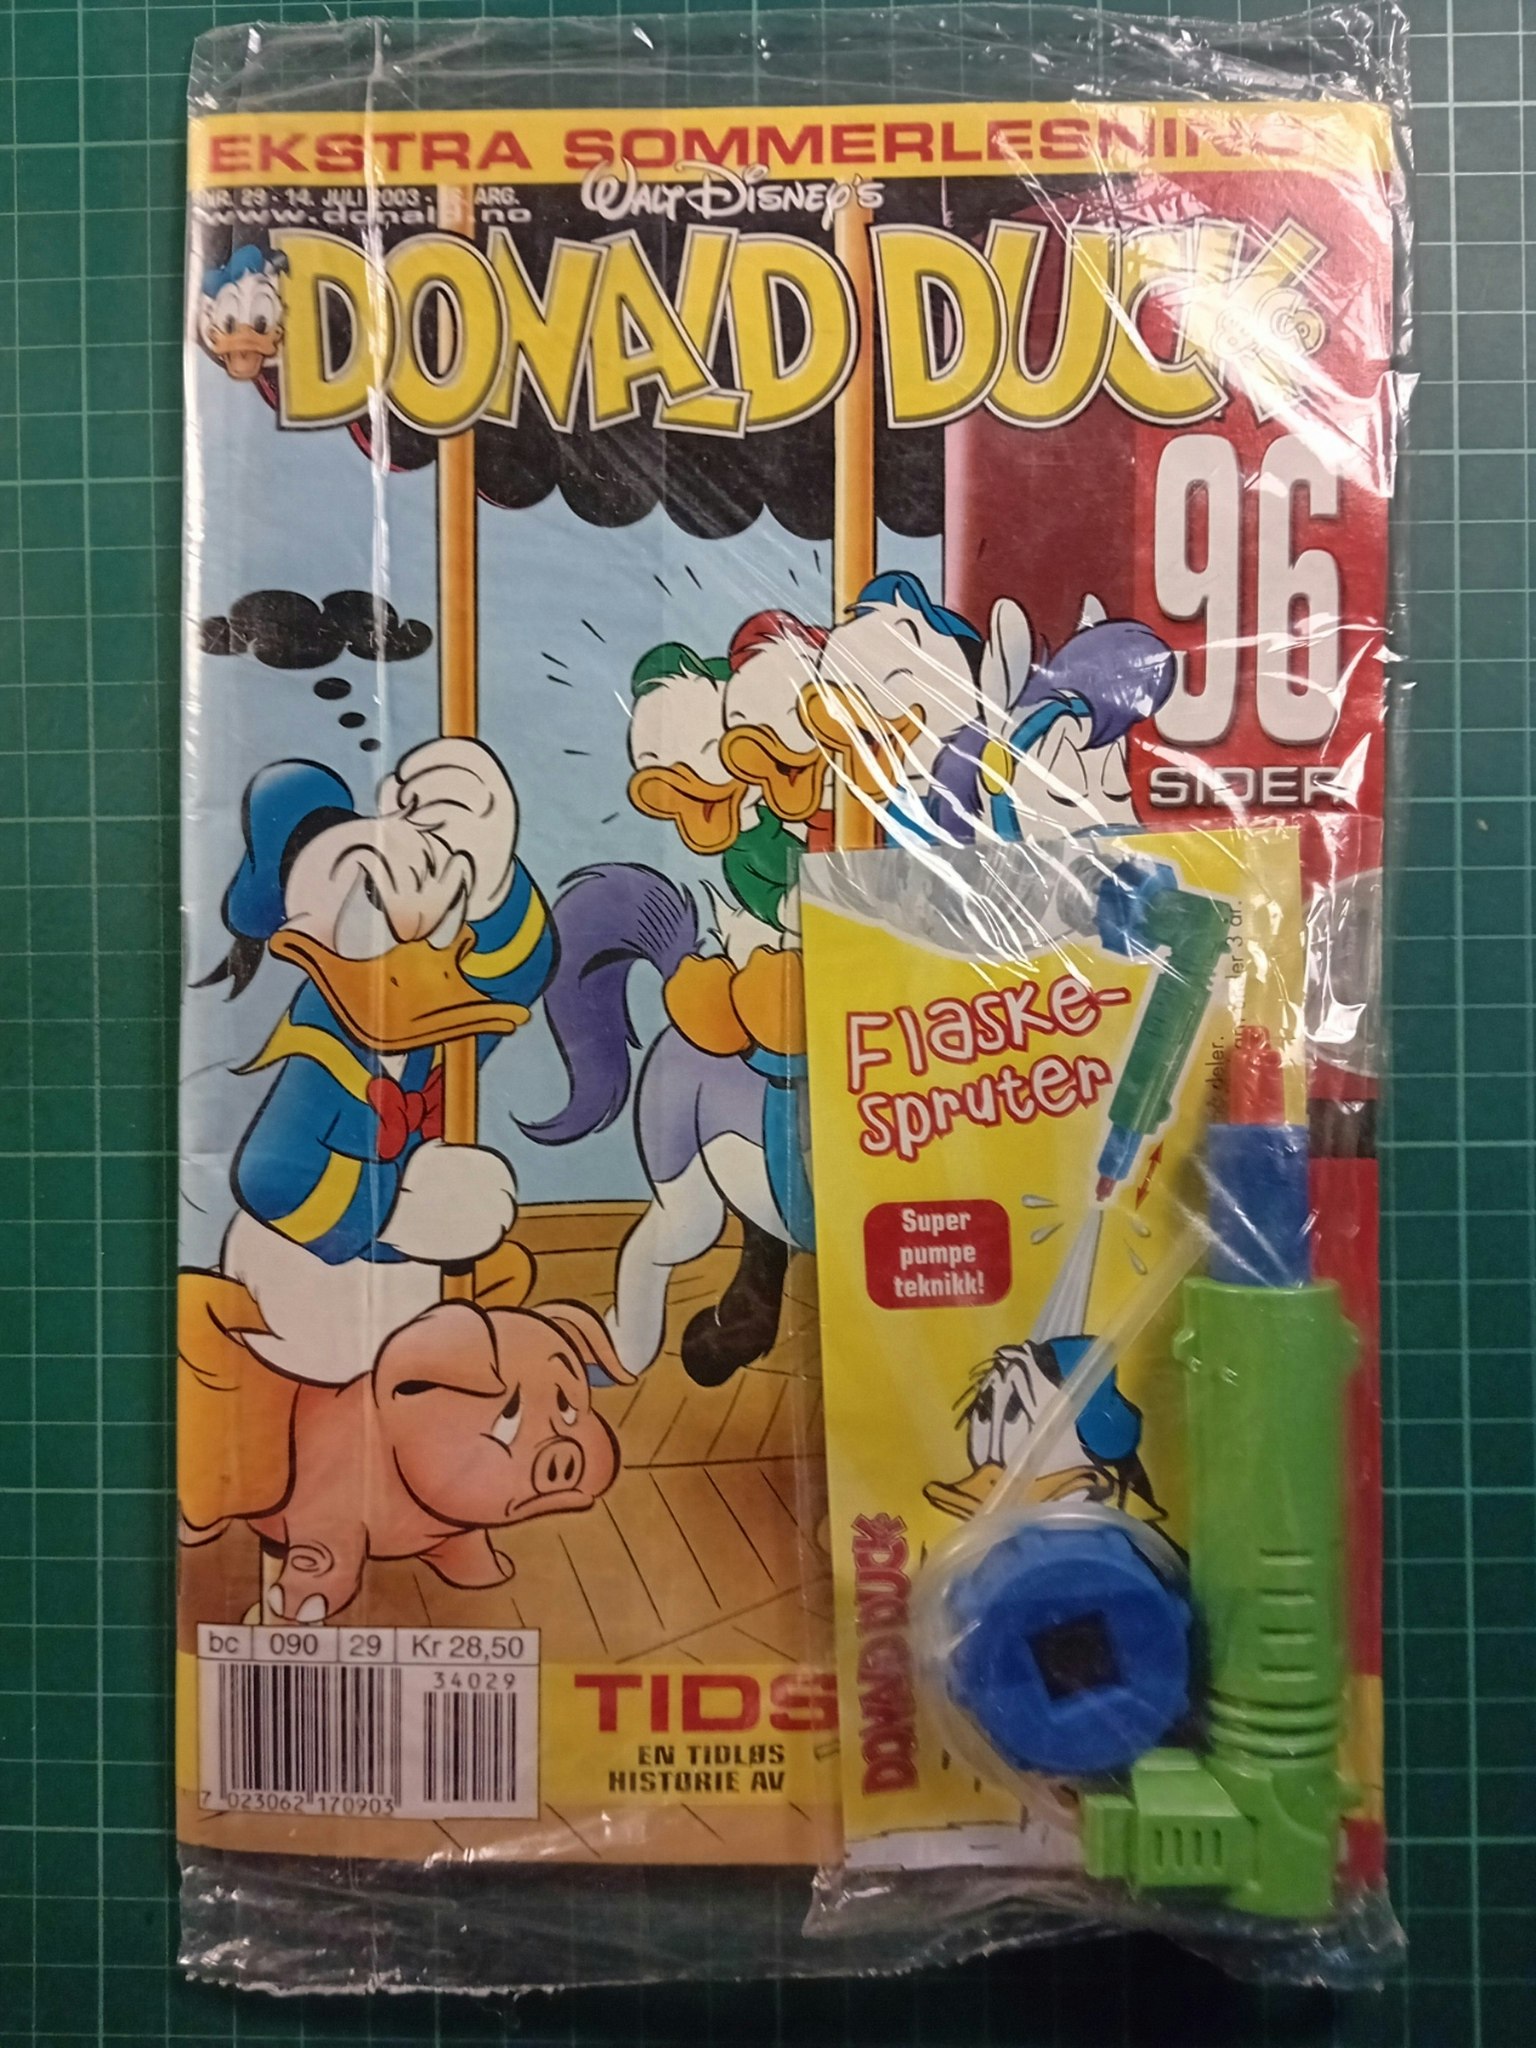 Donald Duck & Co 2003 - 29 Forseglet m/flaskespruter